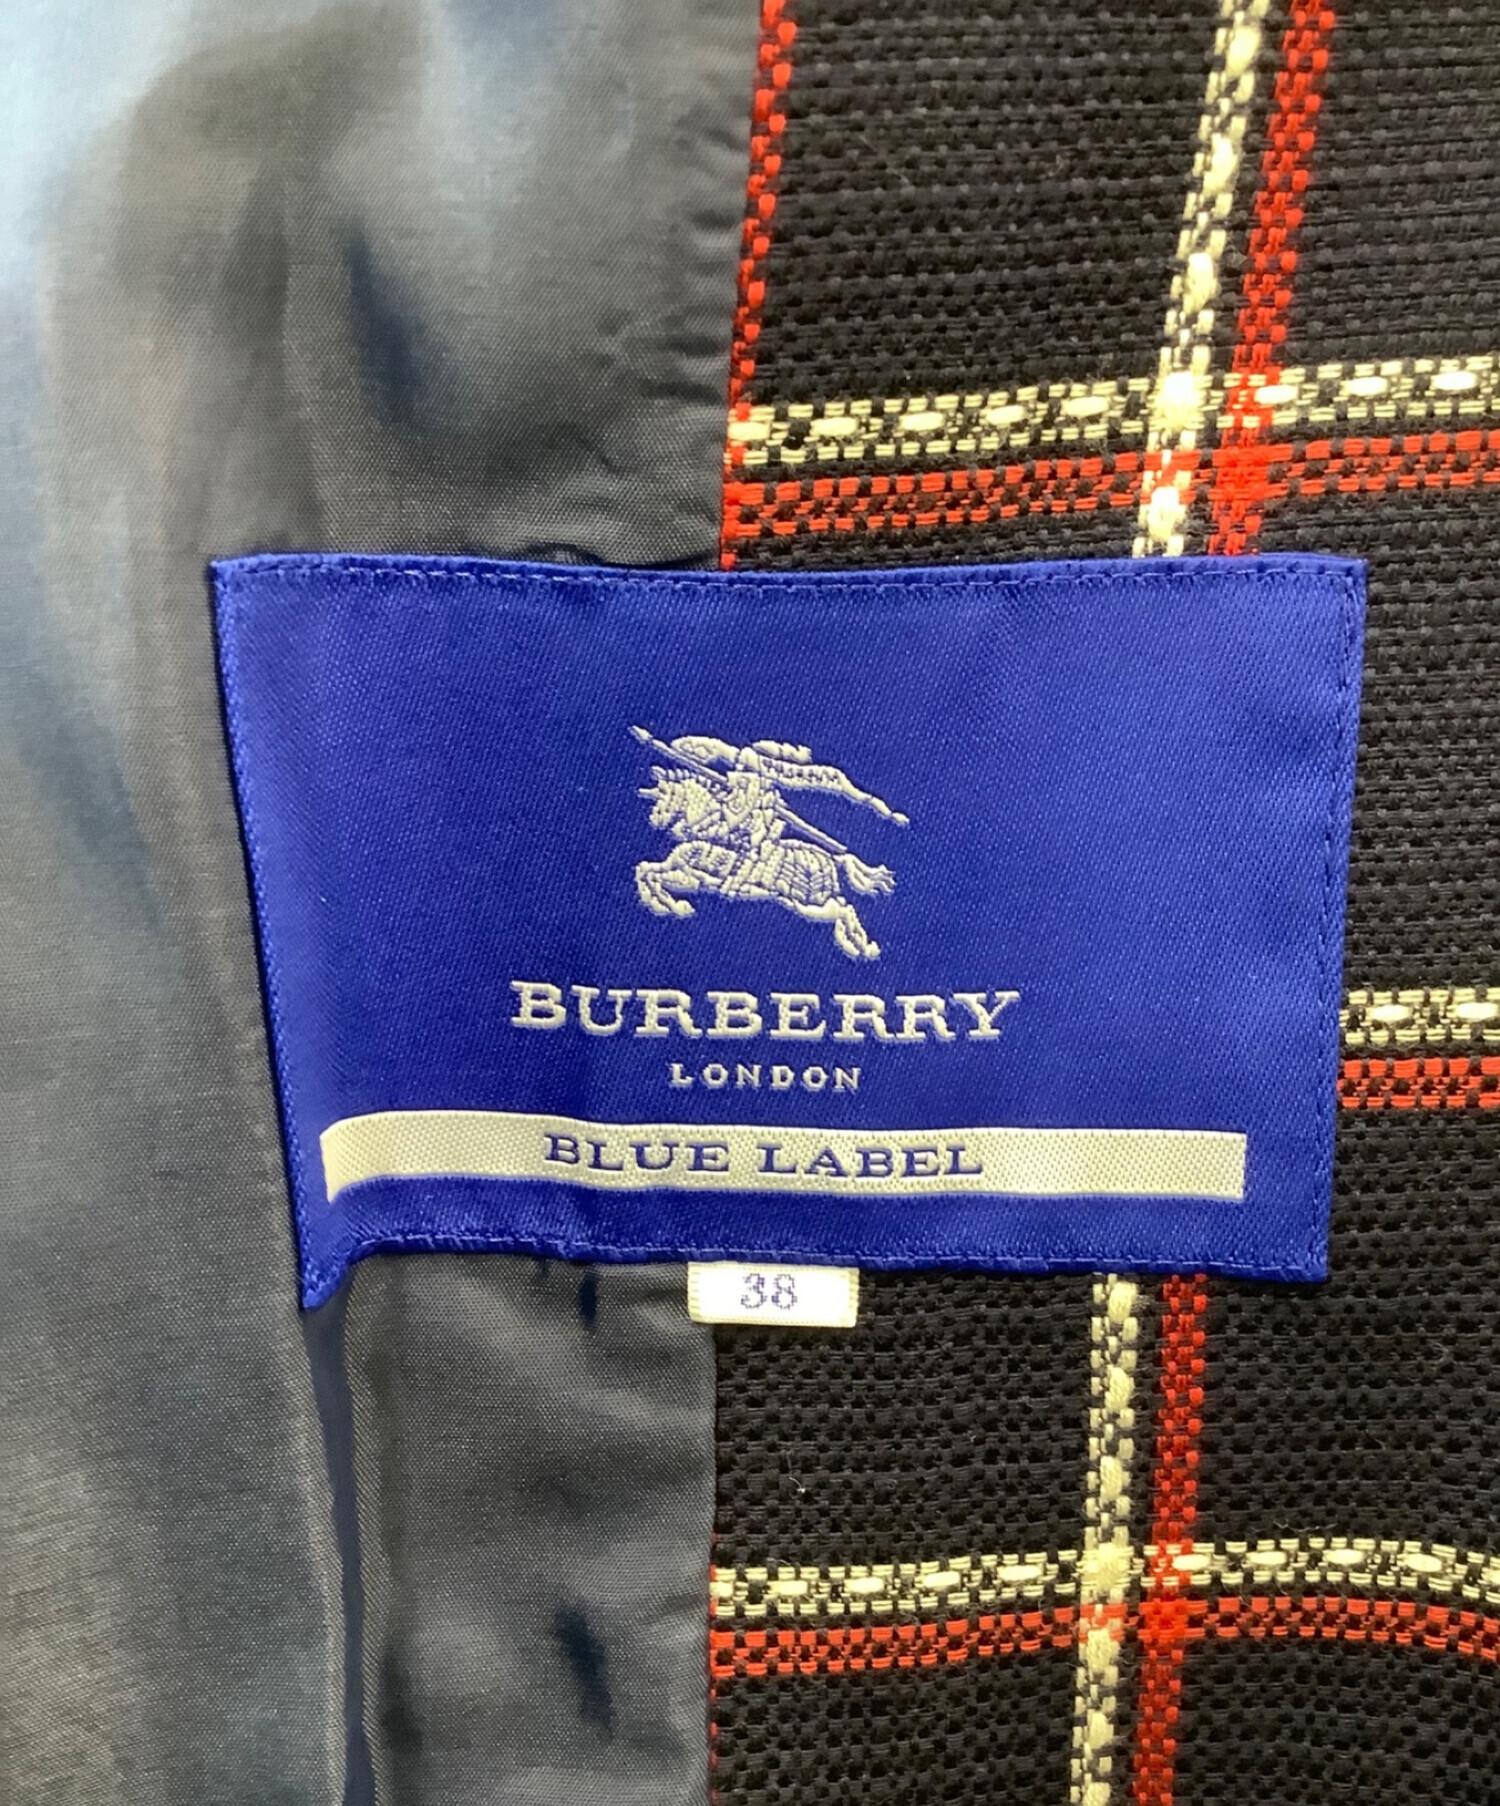 BURBERRY BLUE LABEL (バーバリーブルーレーベル) チェックプリーツコート ネイビー×レッド サイズ:38